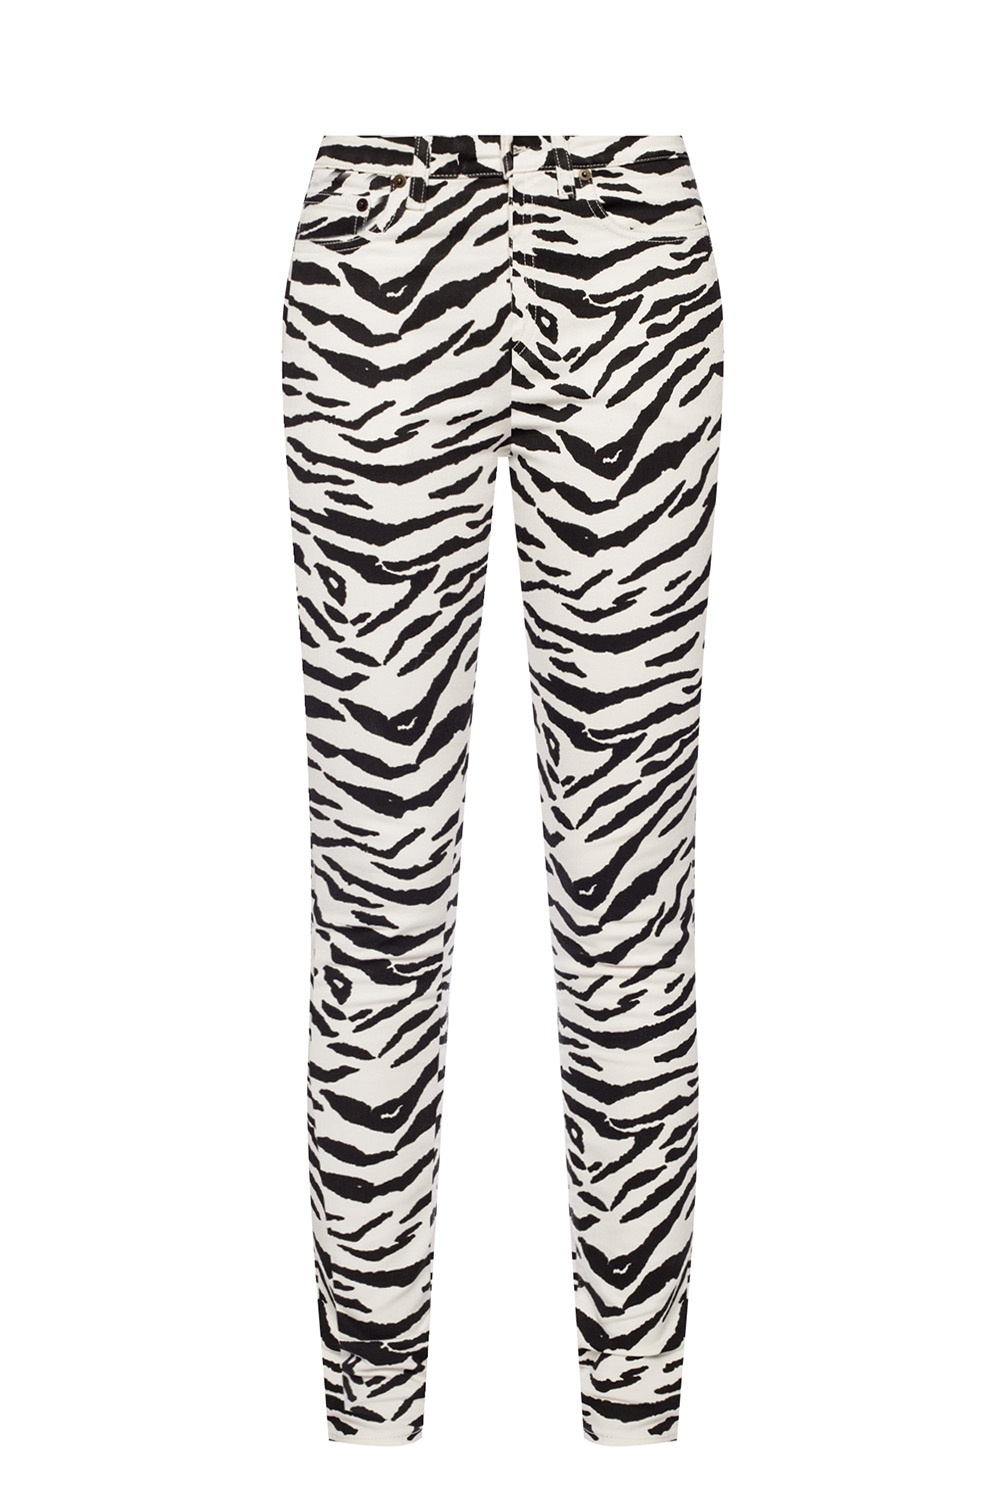 Saint Laurent Zebra jeans | Women's Clothing | Vitkac